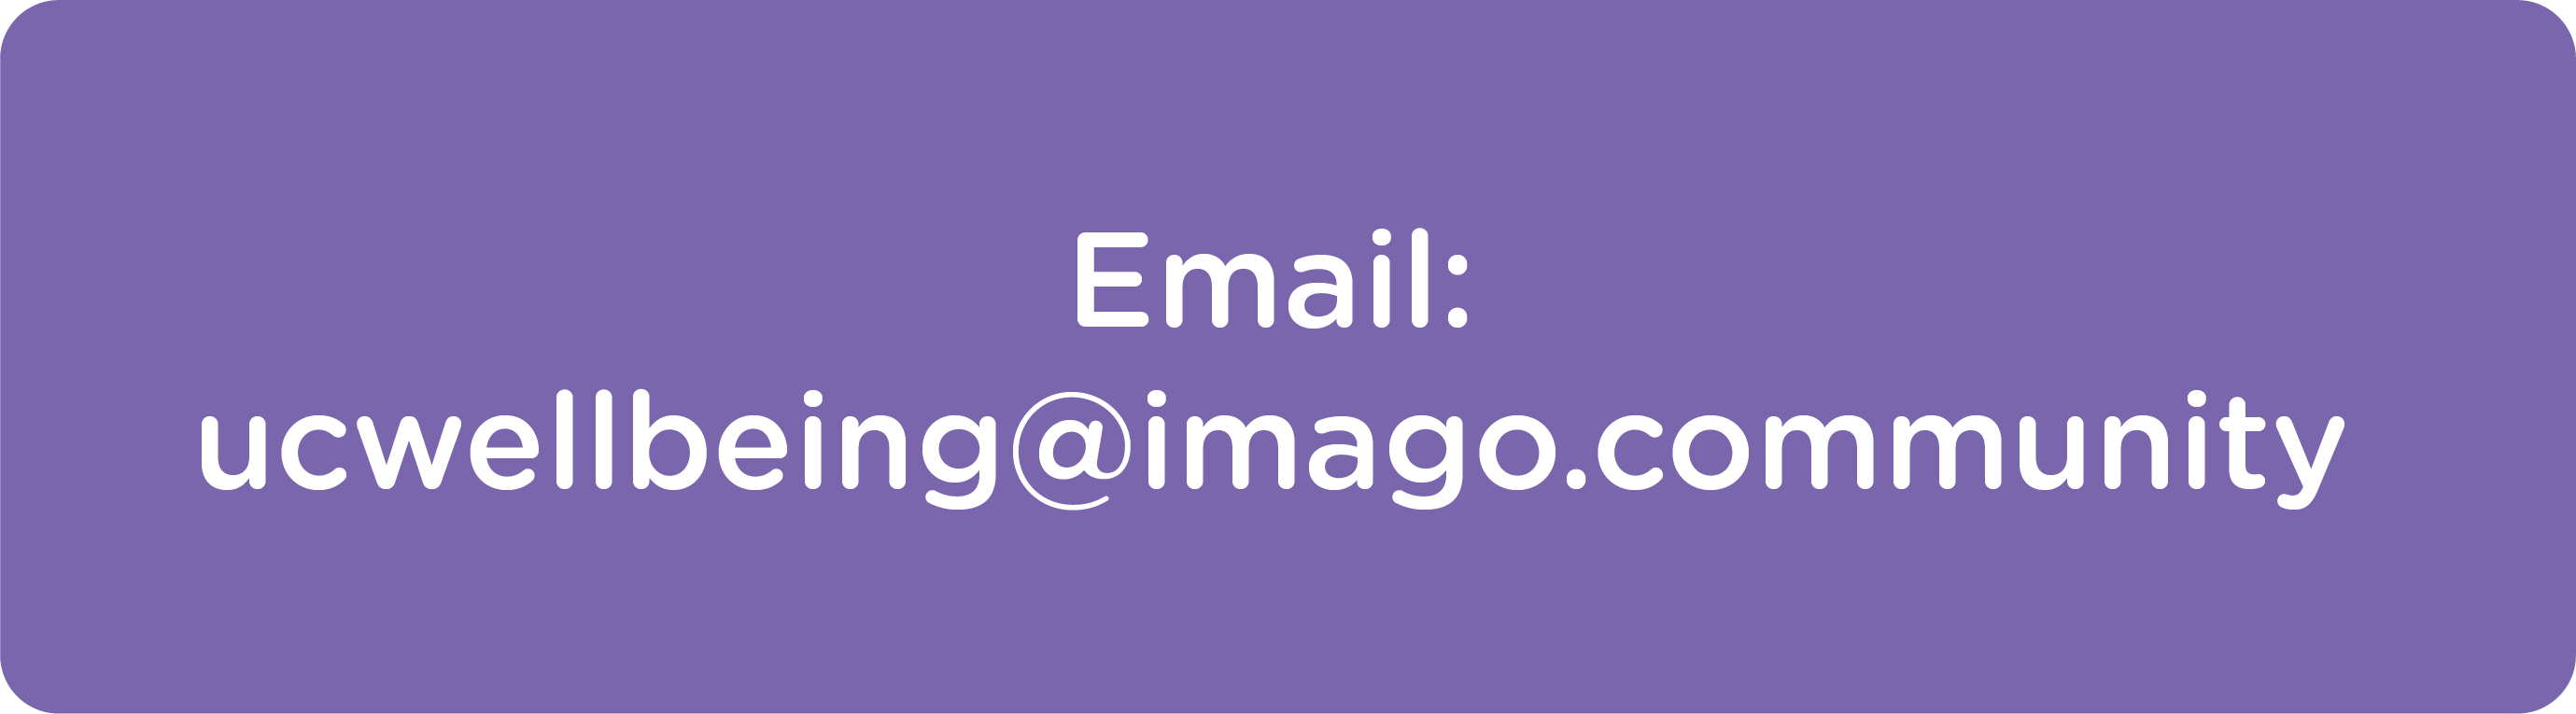 Email Address: ucwellbeing@imago.community